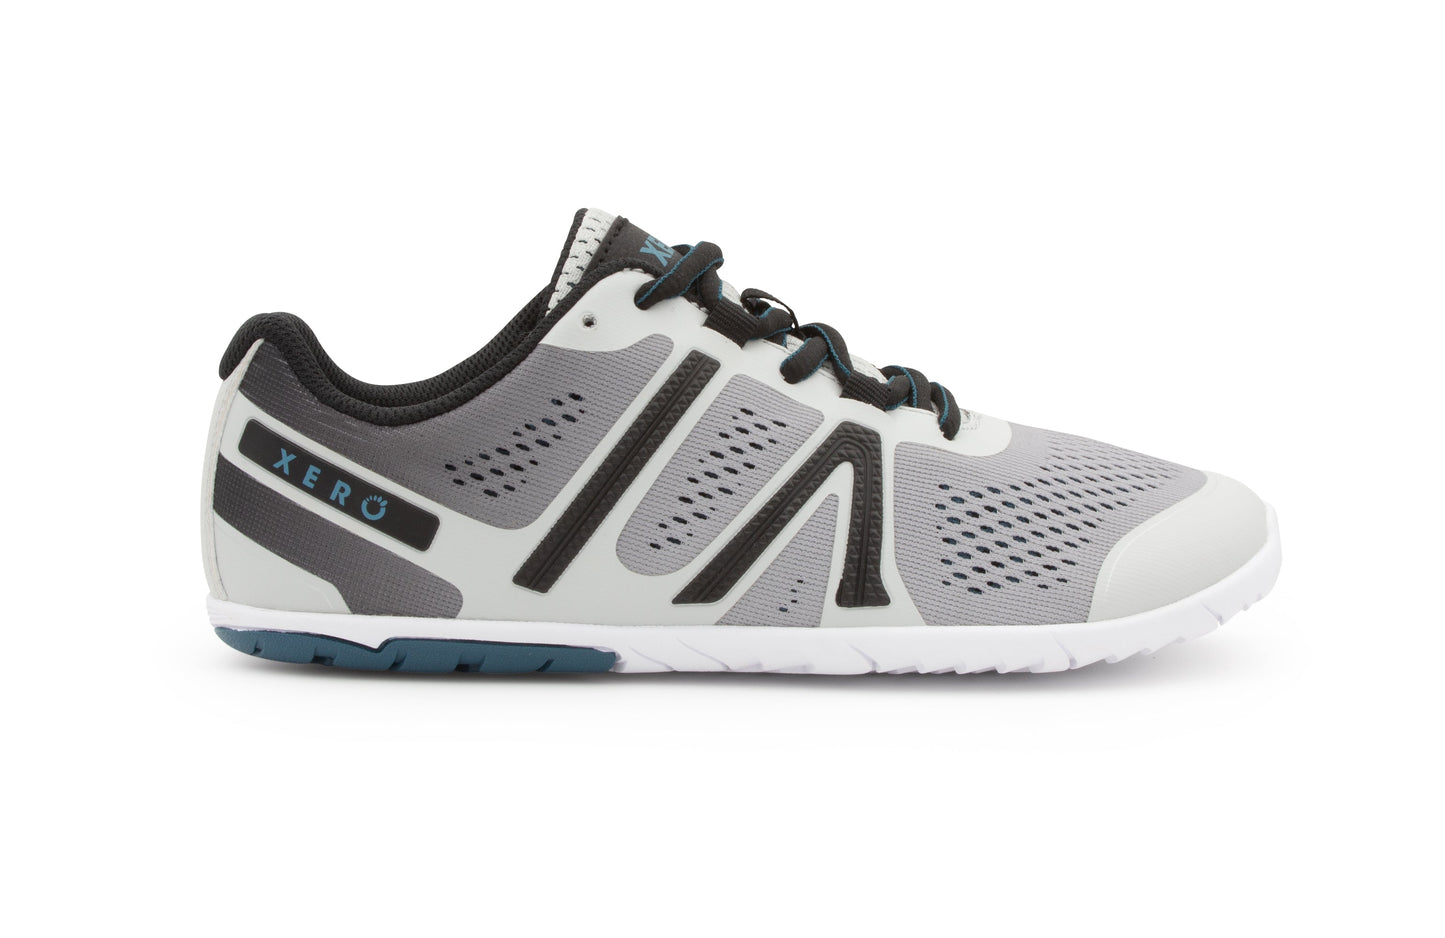 Xero Shoes HFS Womens barfods træningssko/løbesko til kvinder i farven aurora gray, yderside